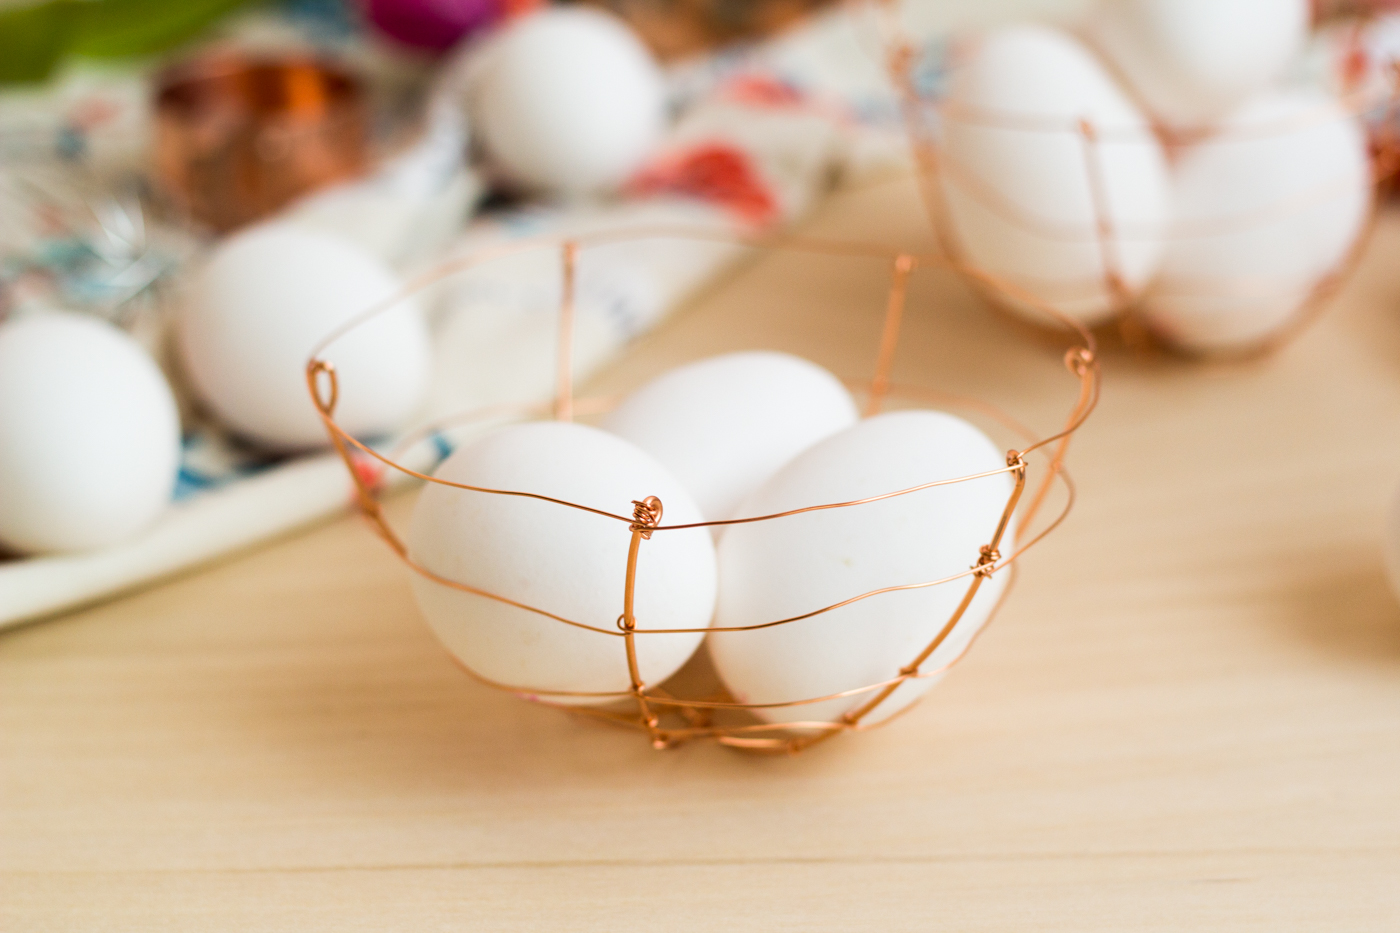 DIY Copper Wire Easter Egg Baskets | @fallfordiy